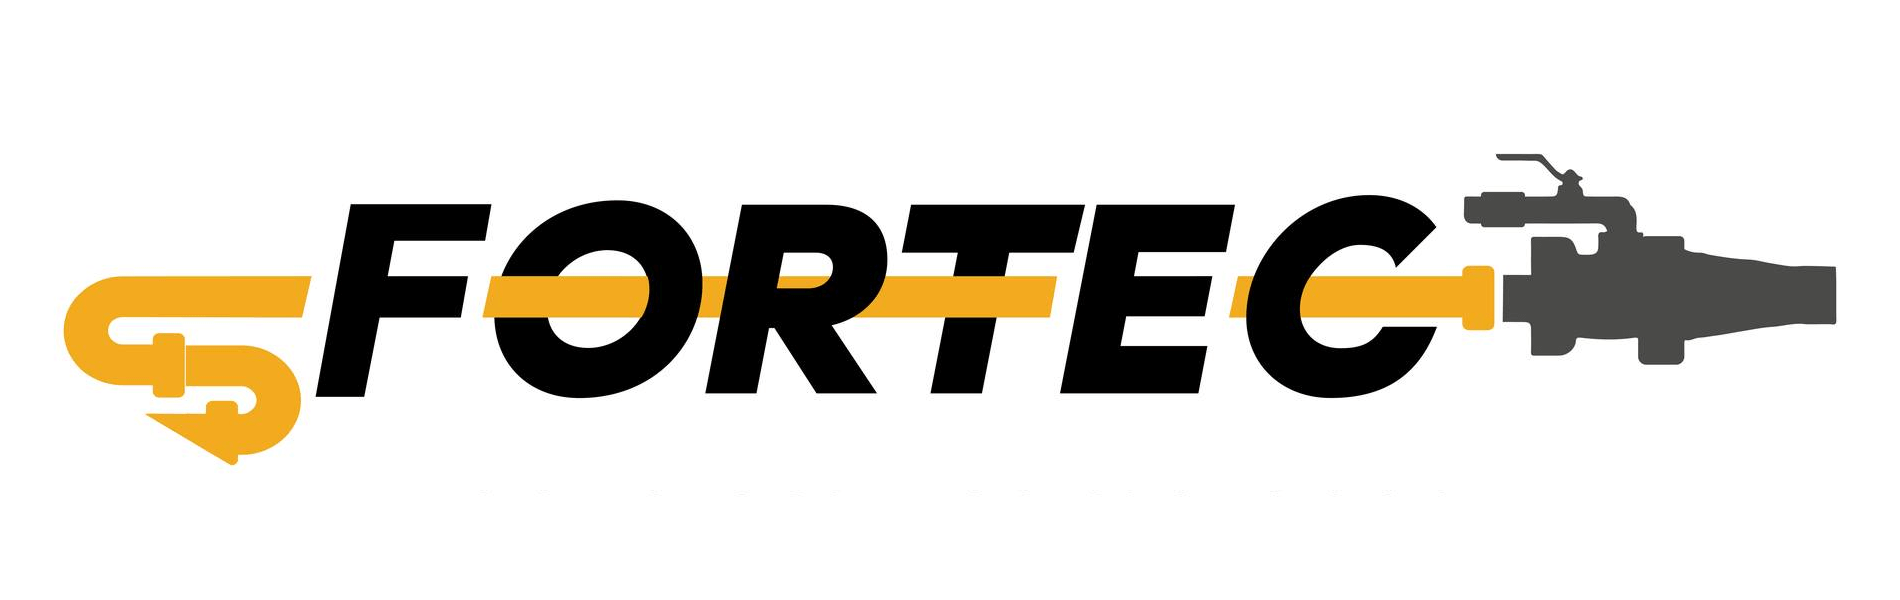 Logotipo Fortec - Concretamos tus ideas